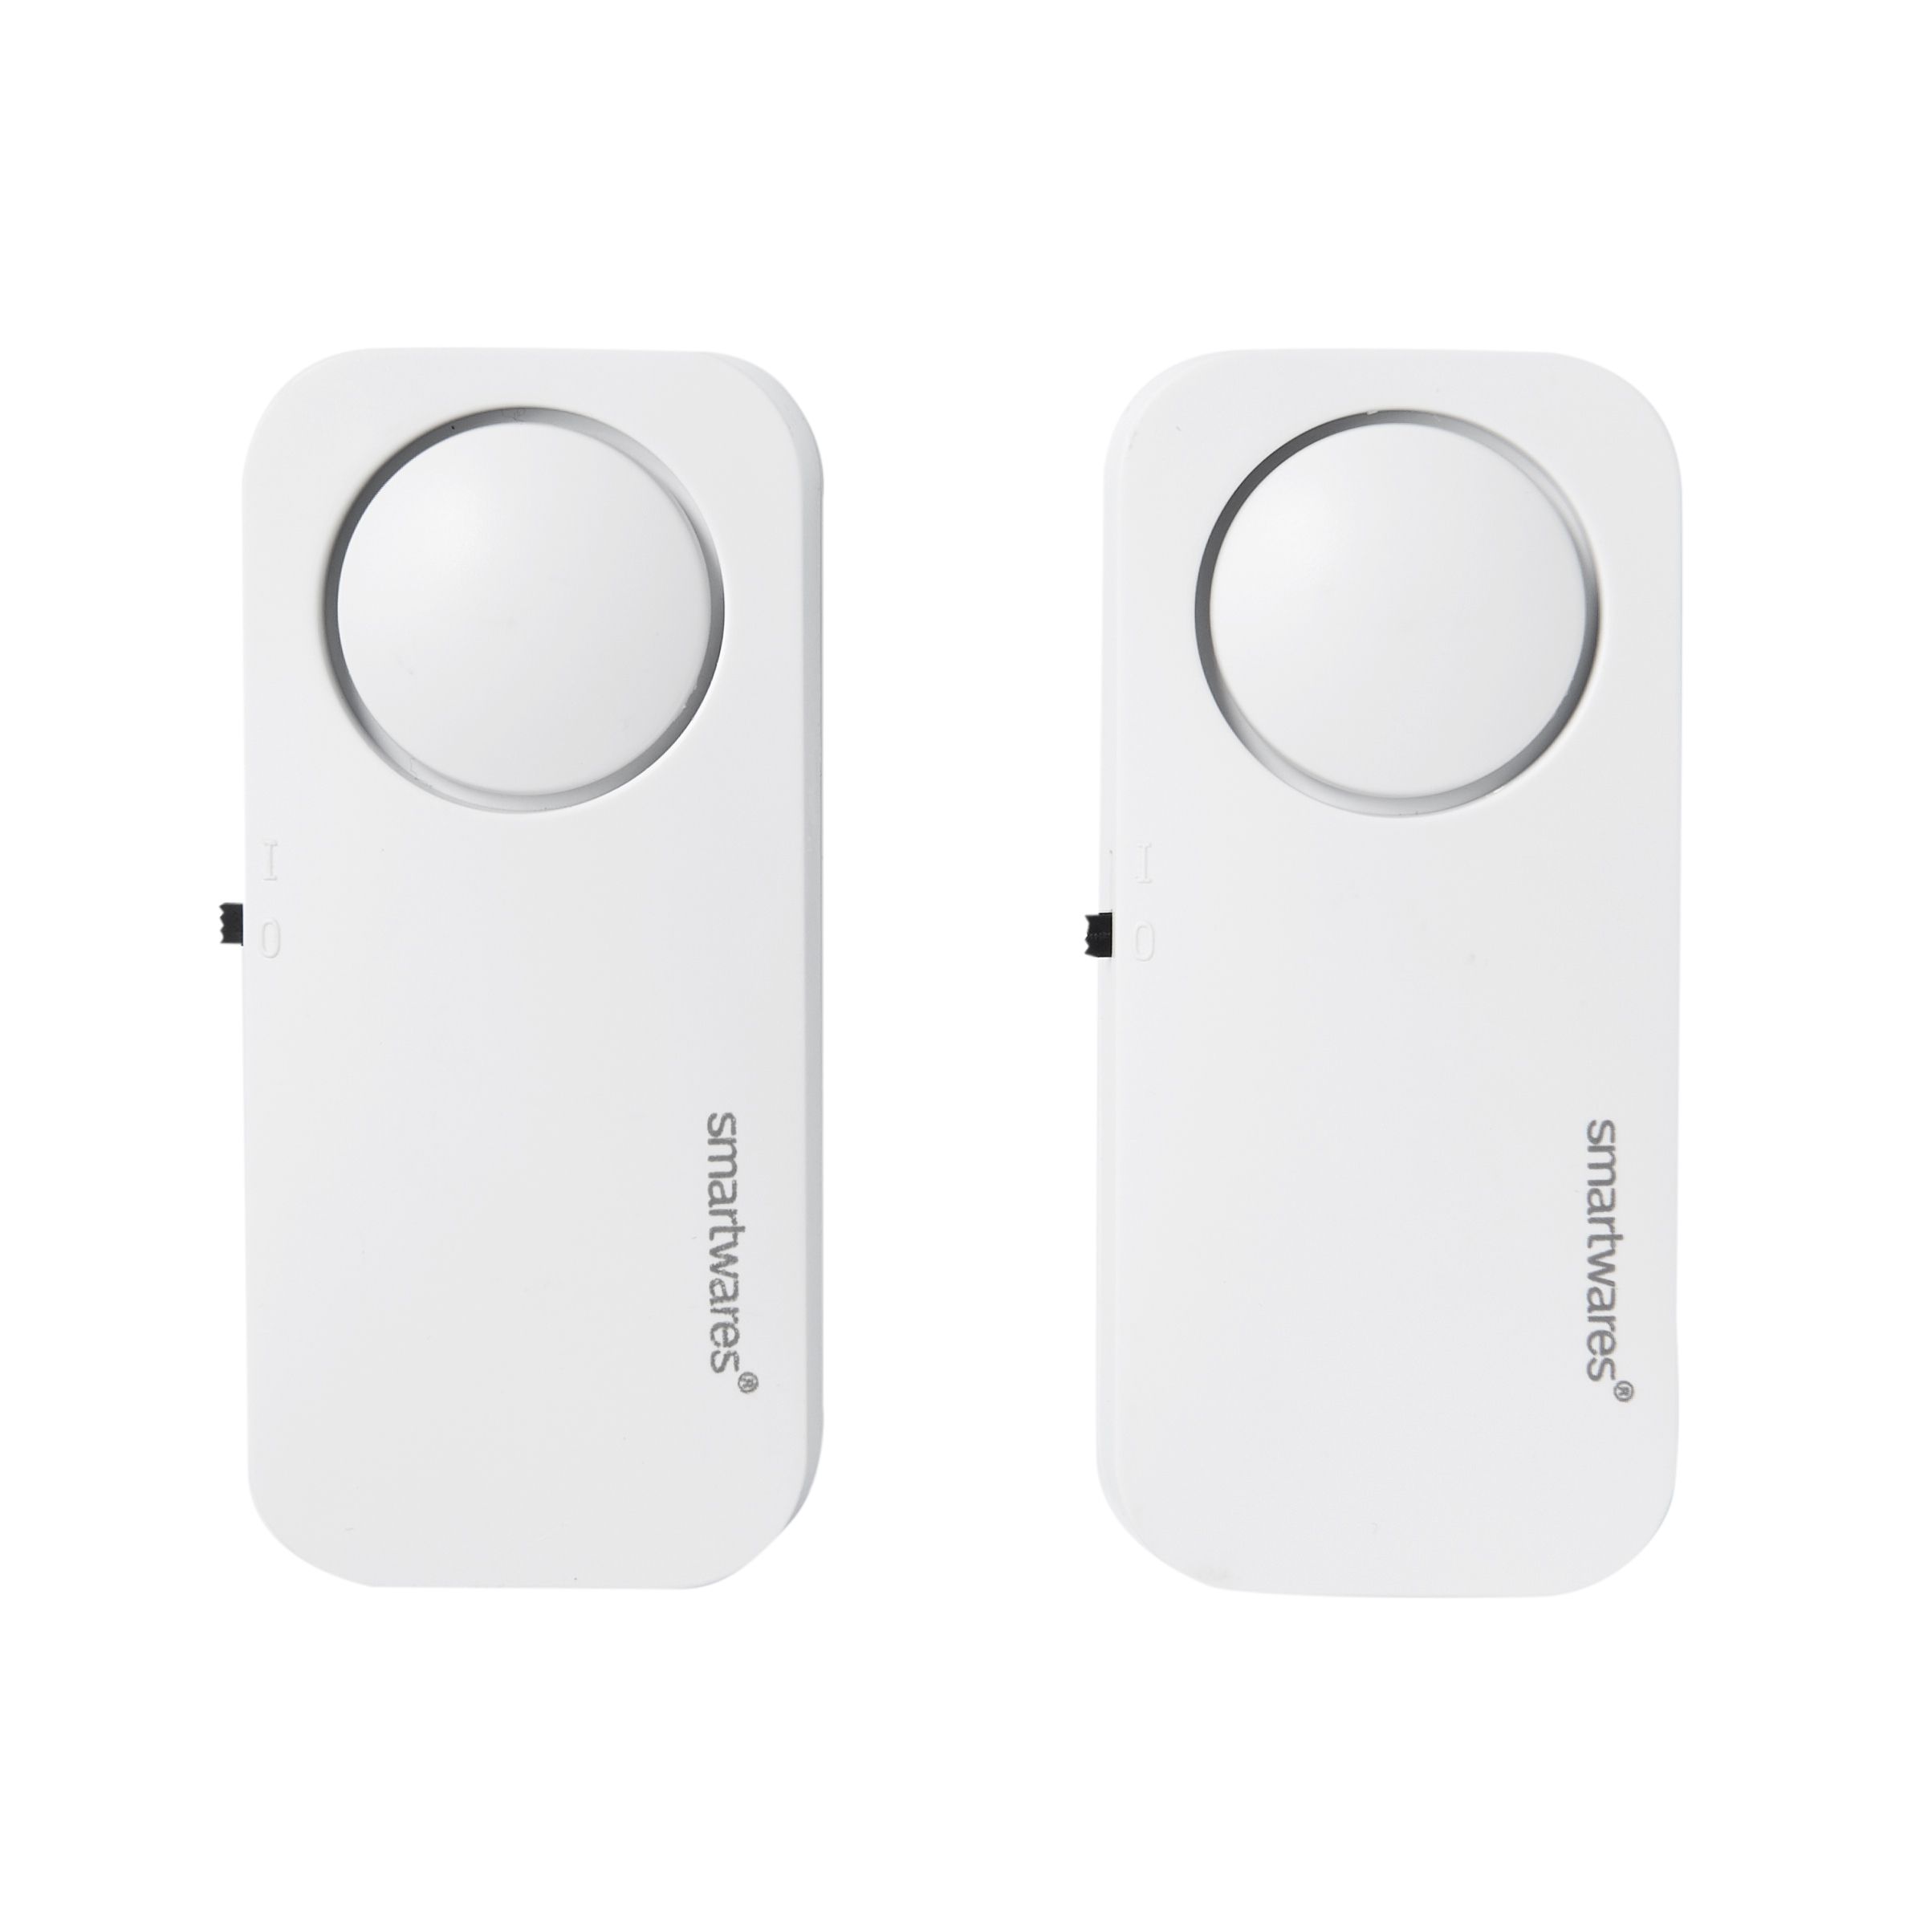 Smartwares Glass Break Wireless Intruder alarm sensor, Pack of 2